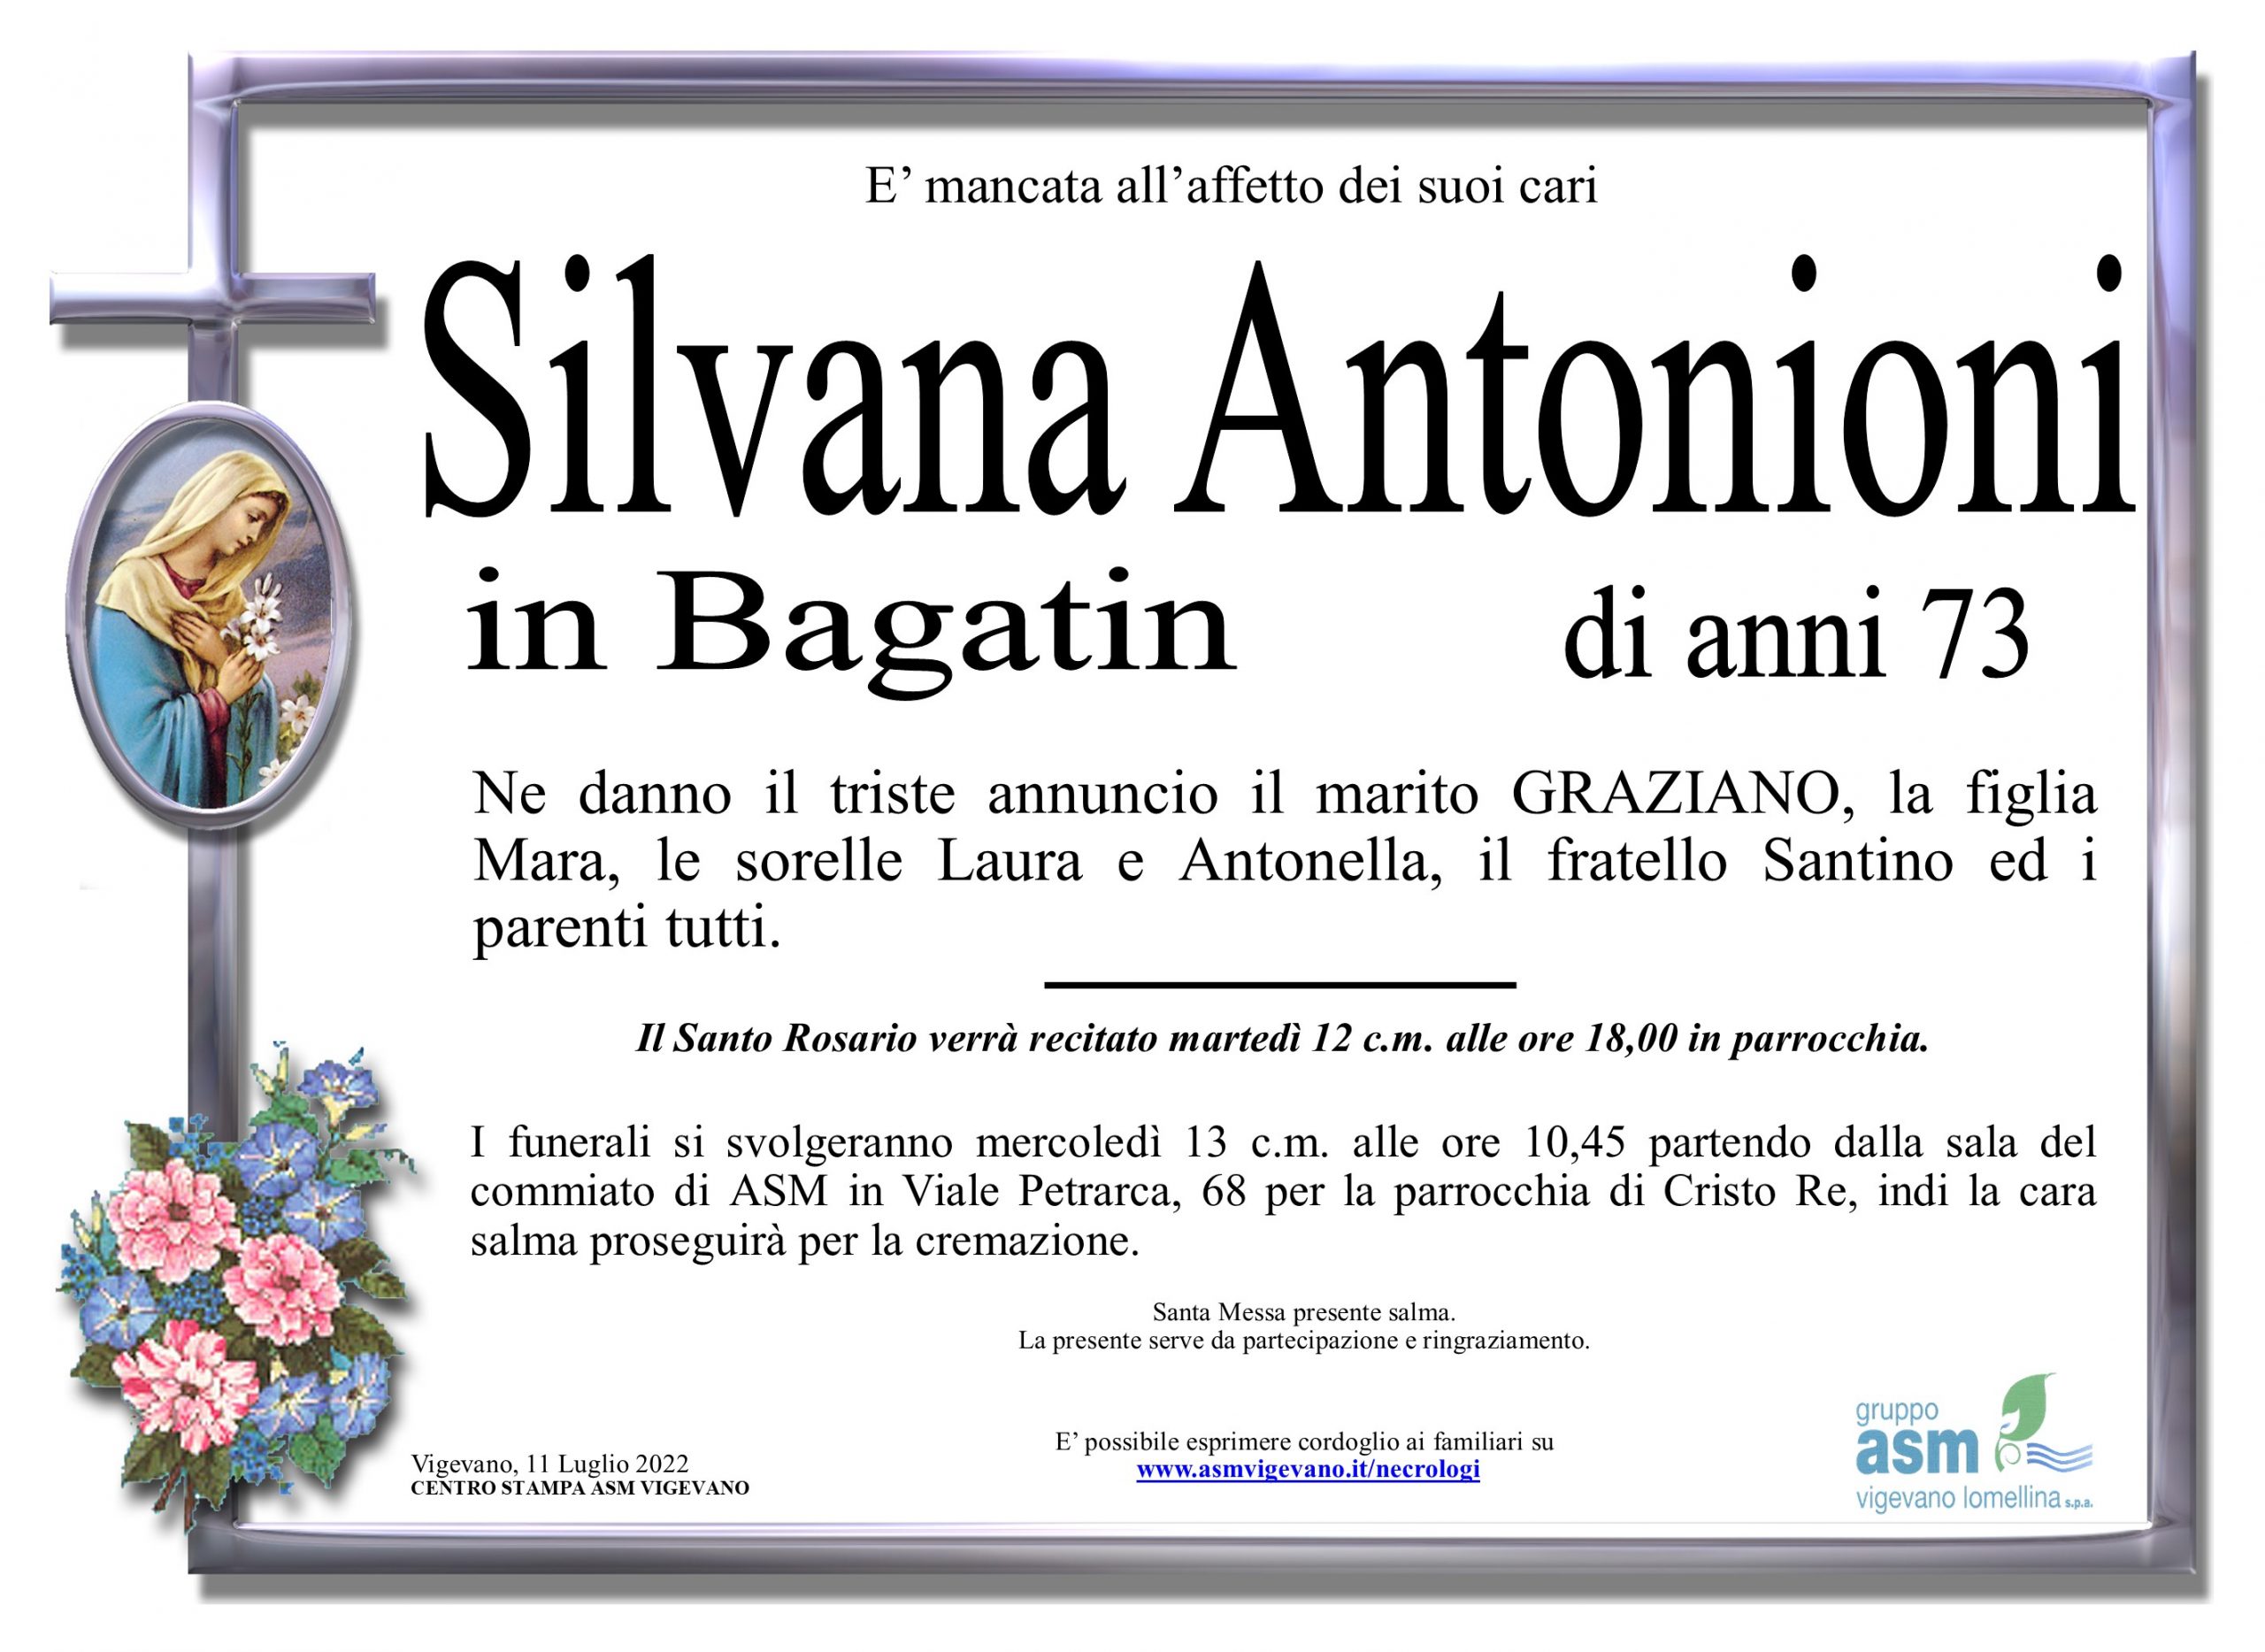 Silvana Antonioni